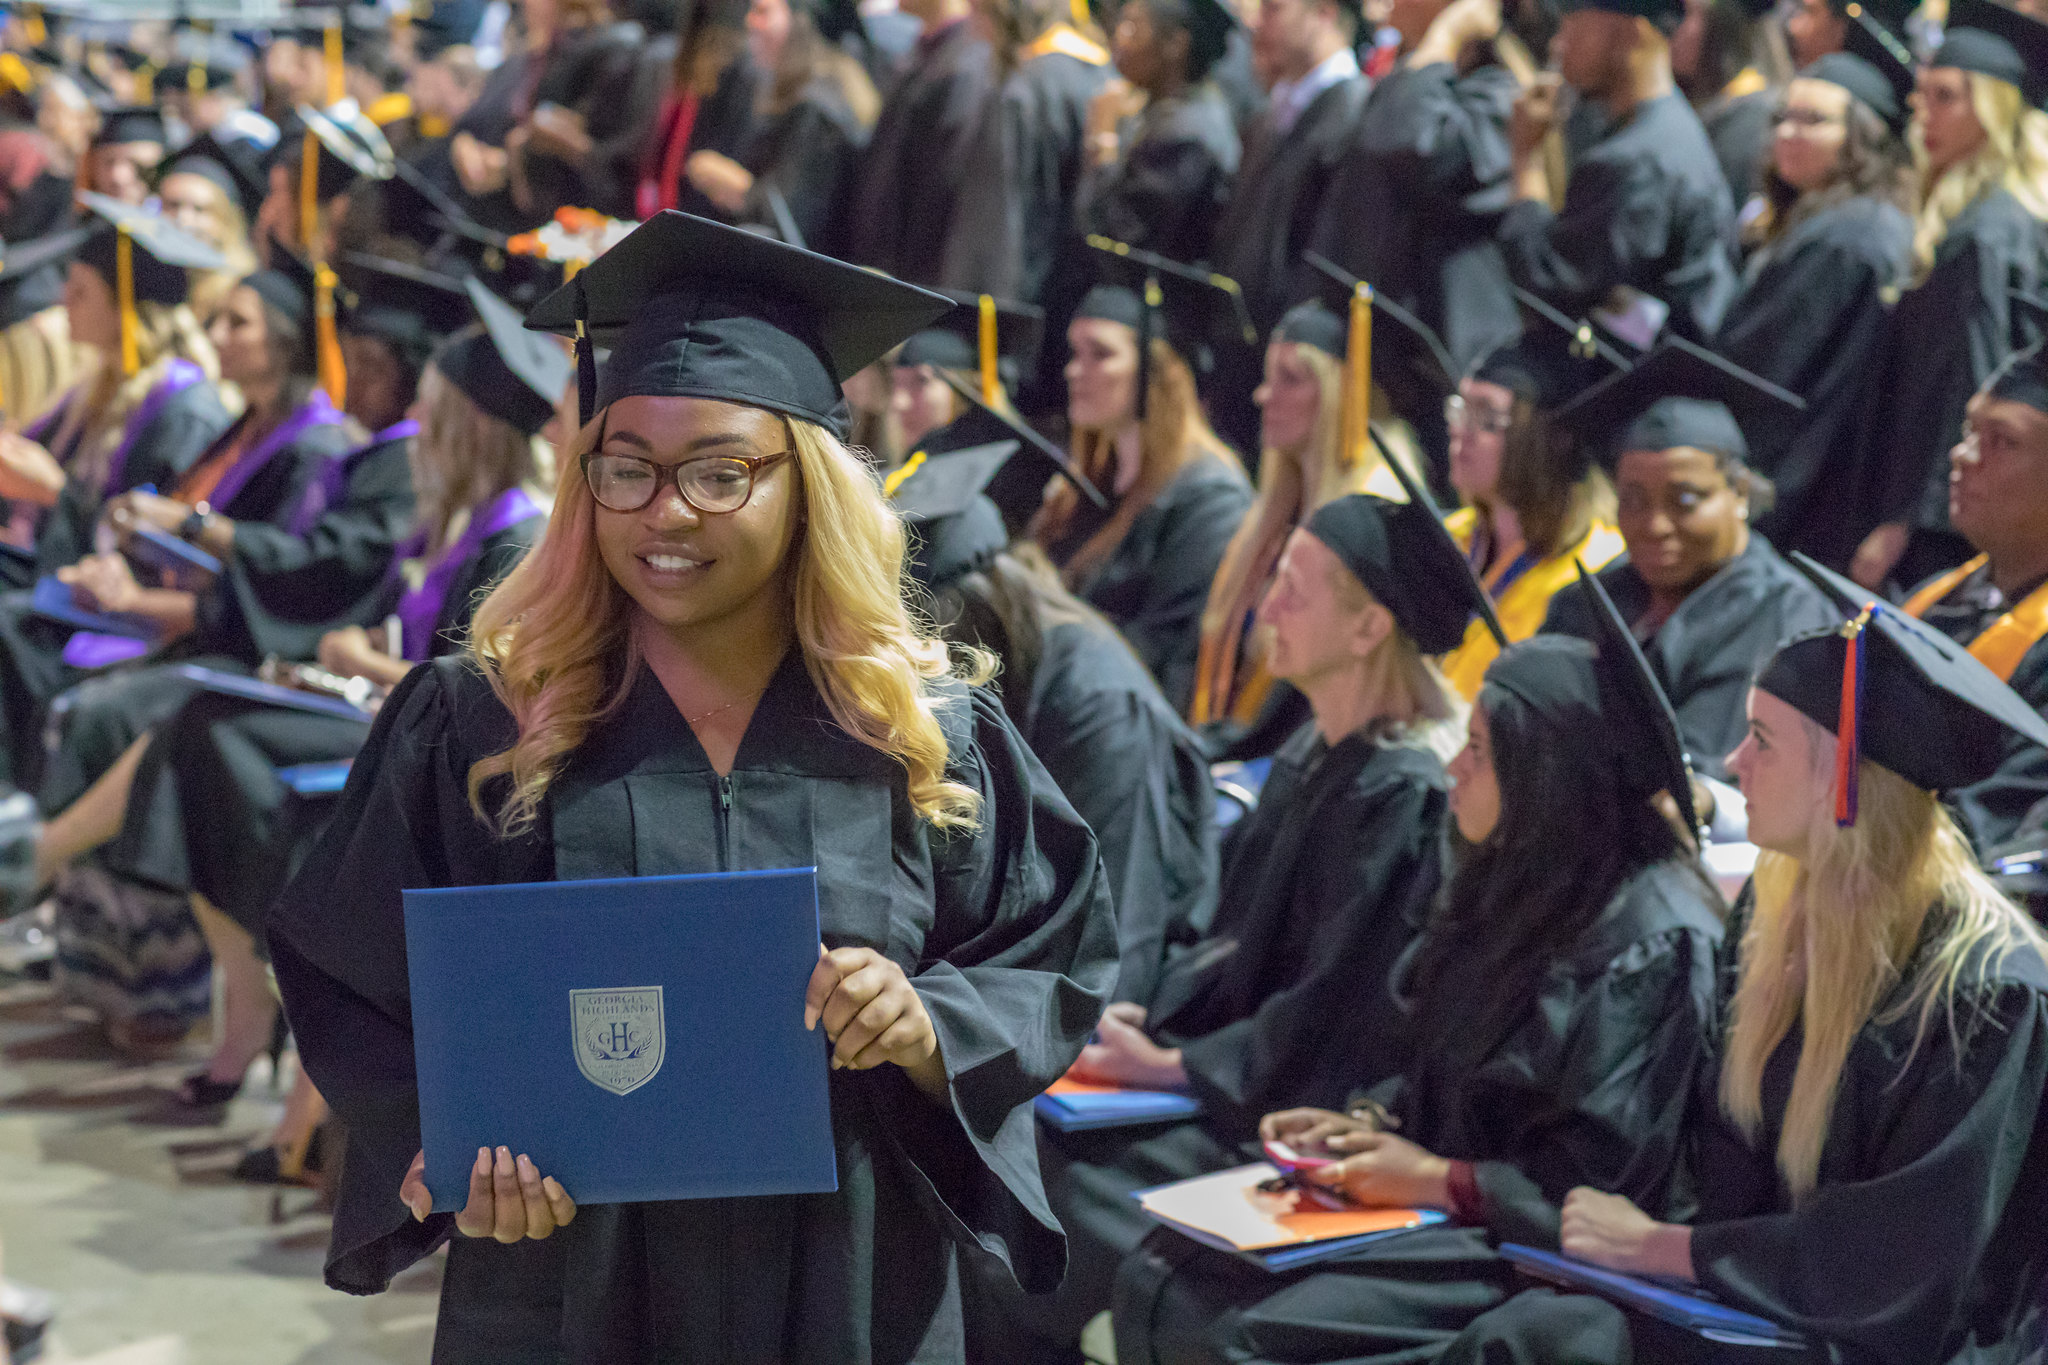 graduate holding degree